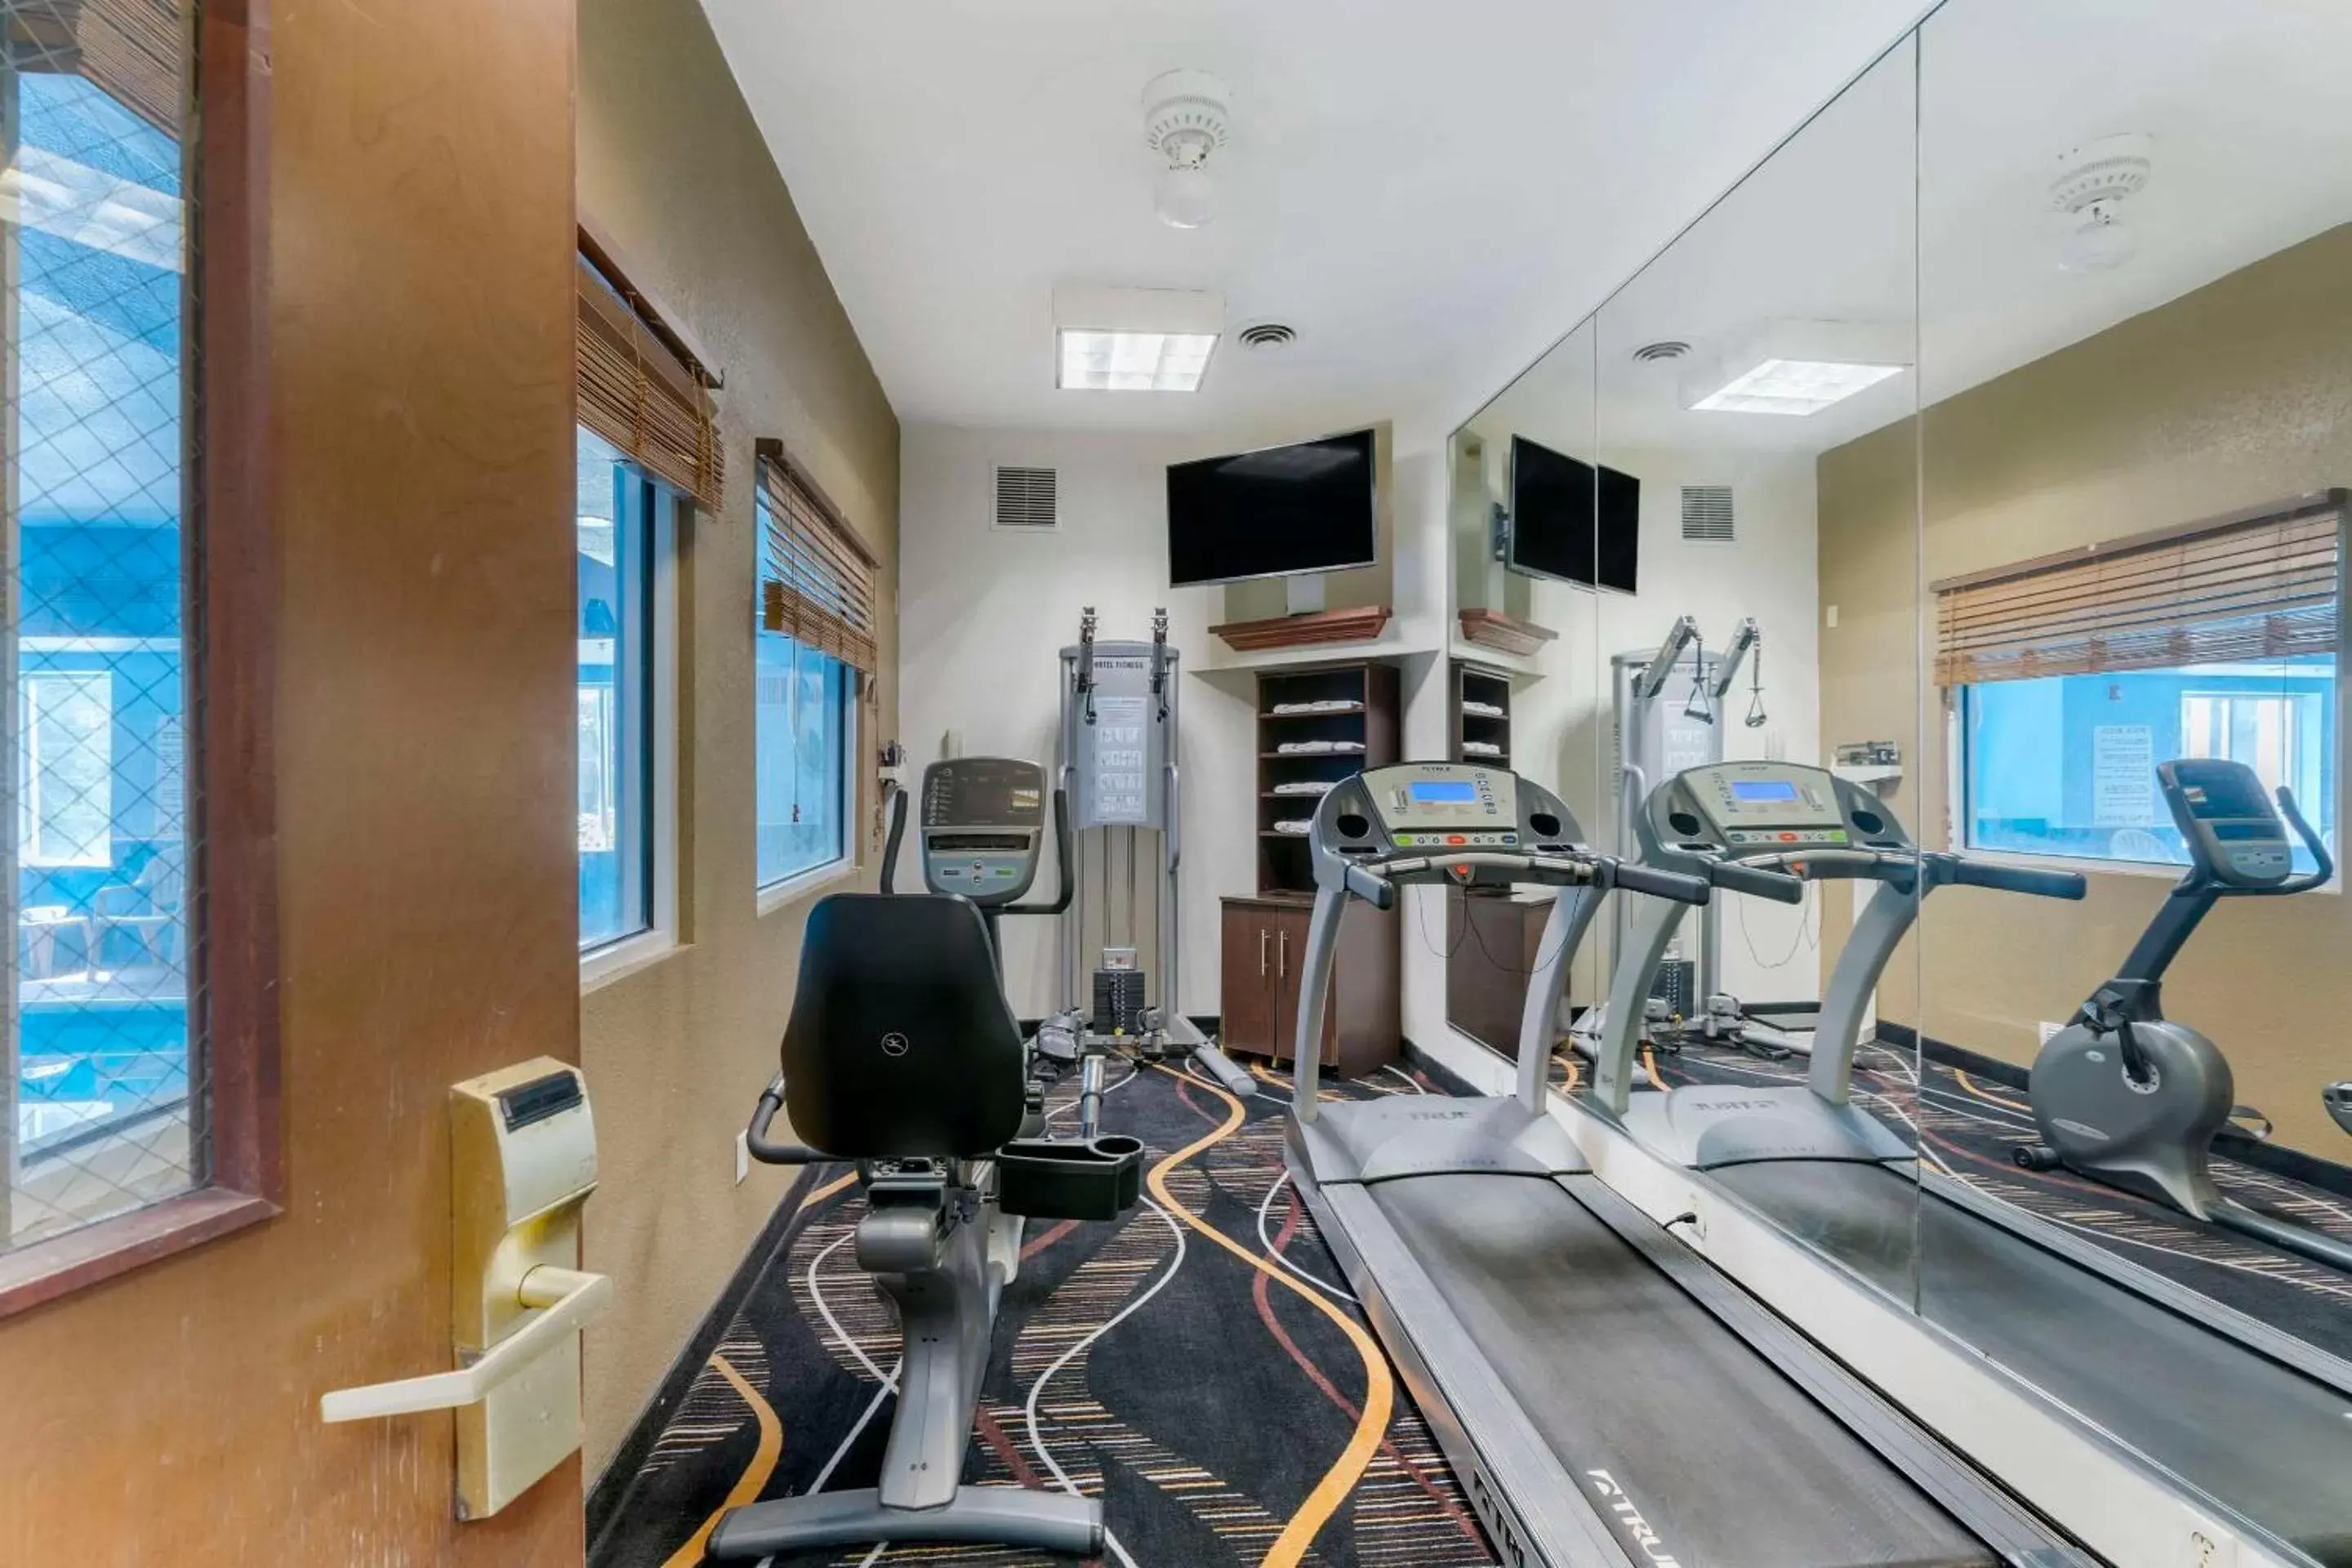 Fitness centre/facilities, Fitness Center/Facilities in Quality Suites La Grange